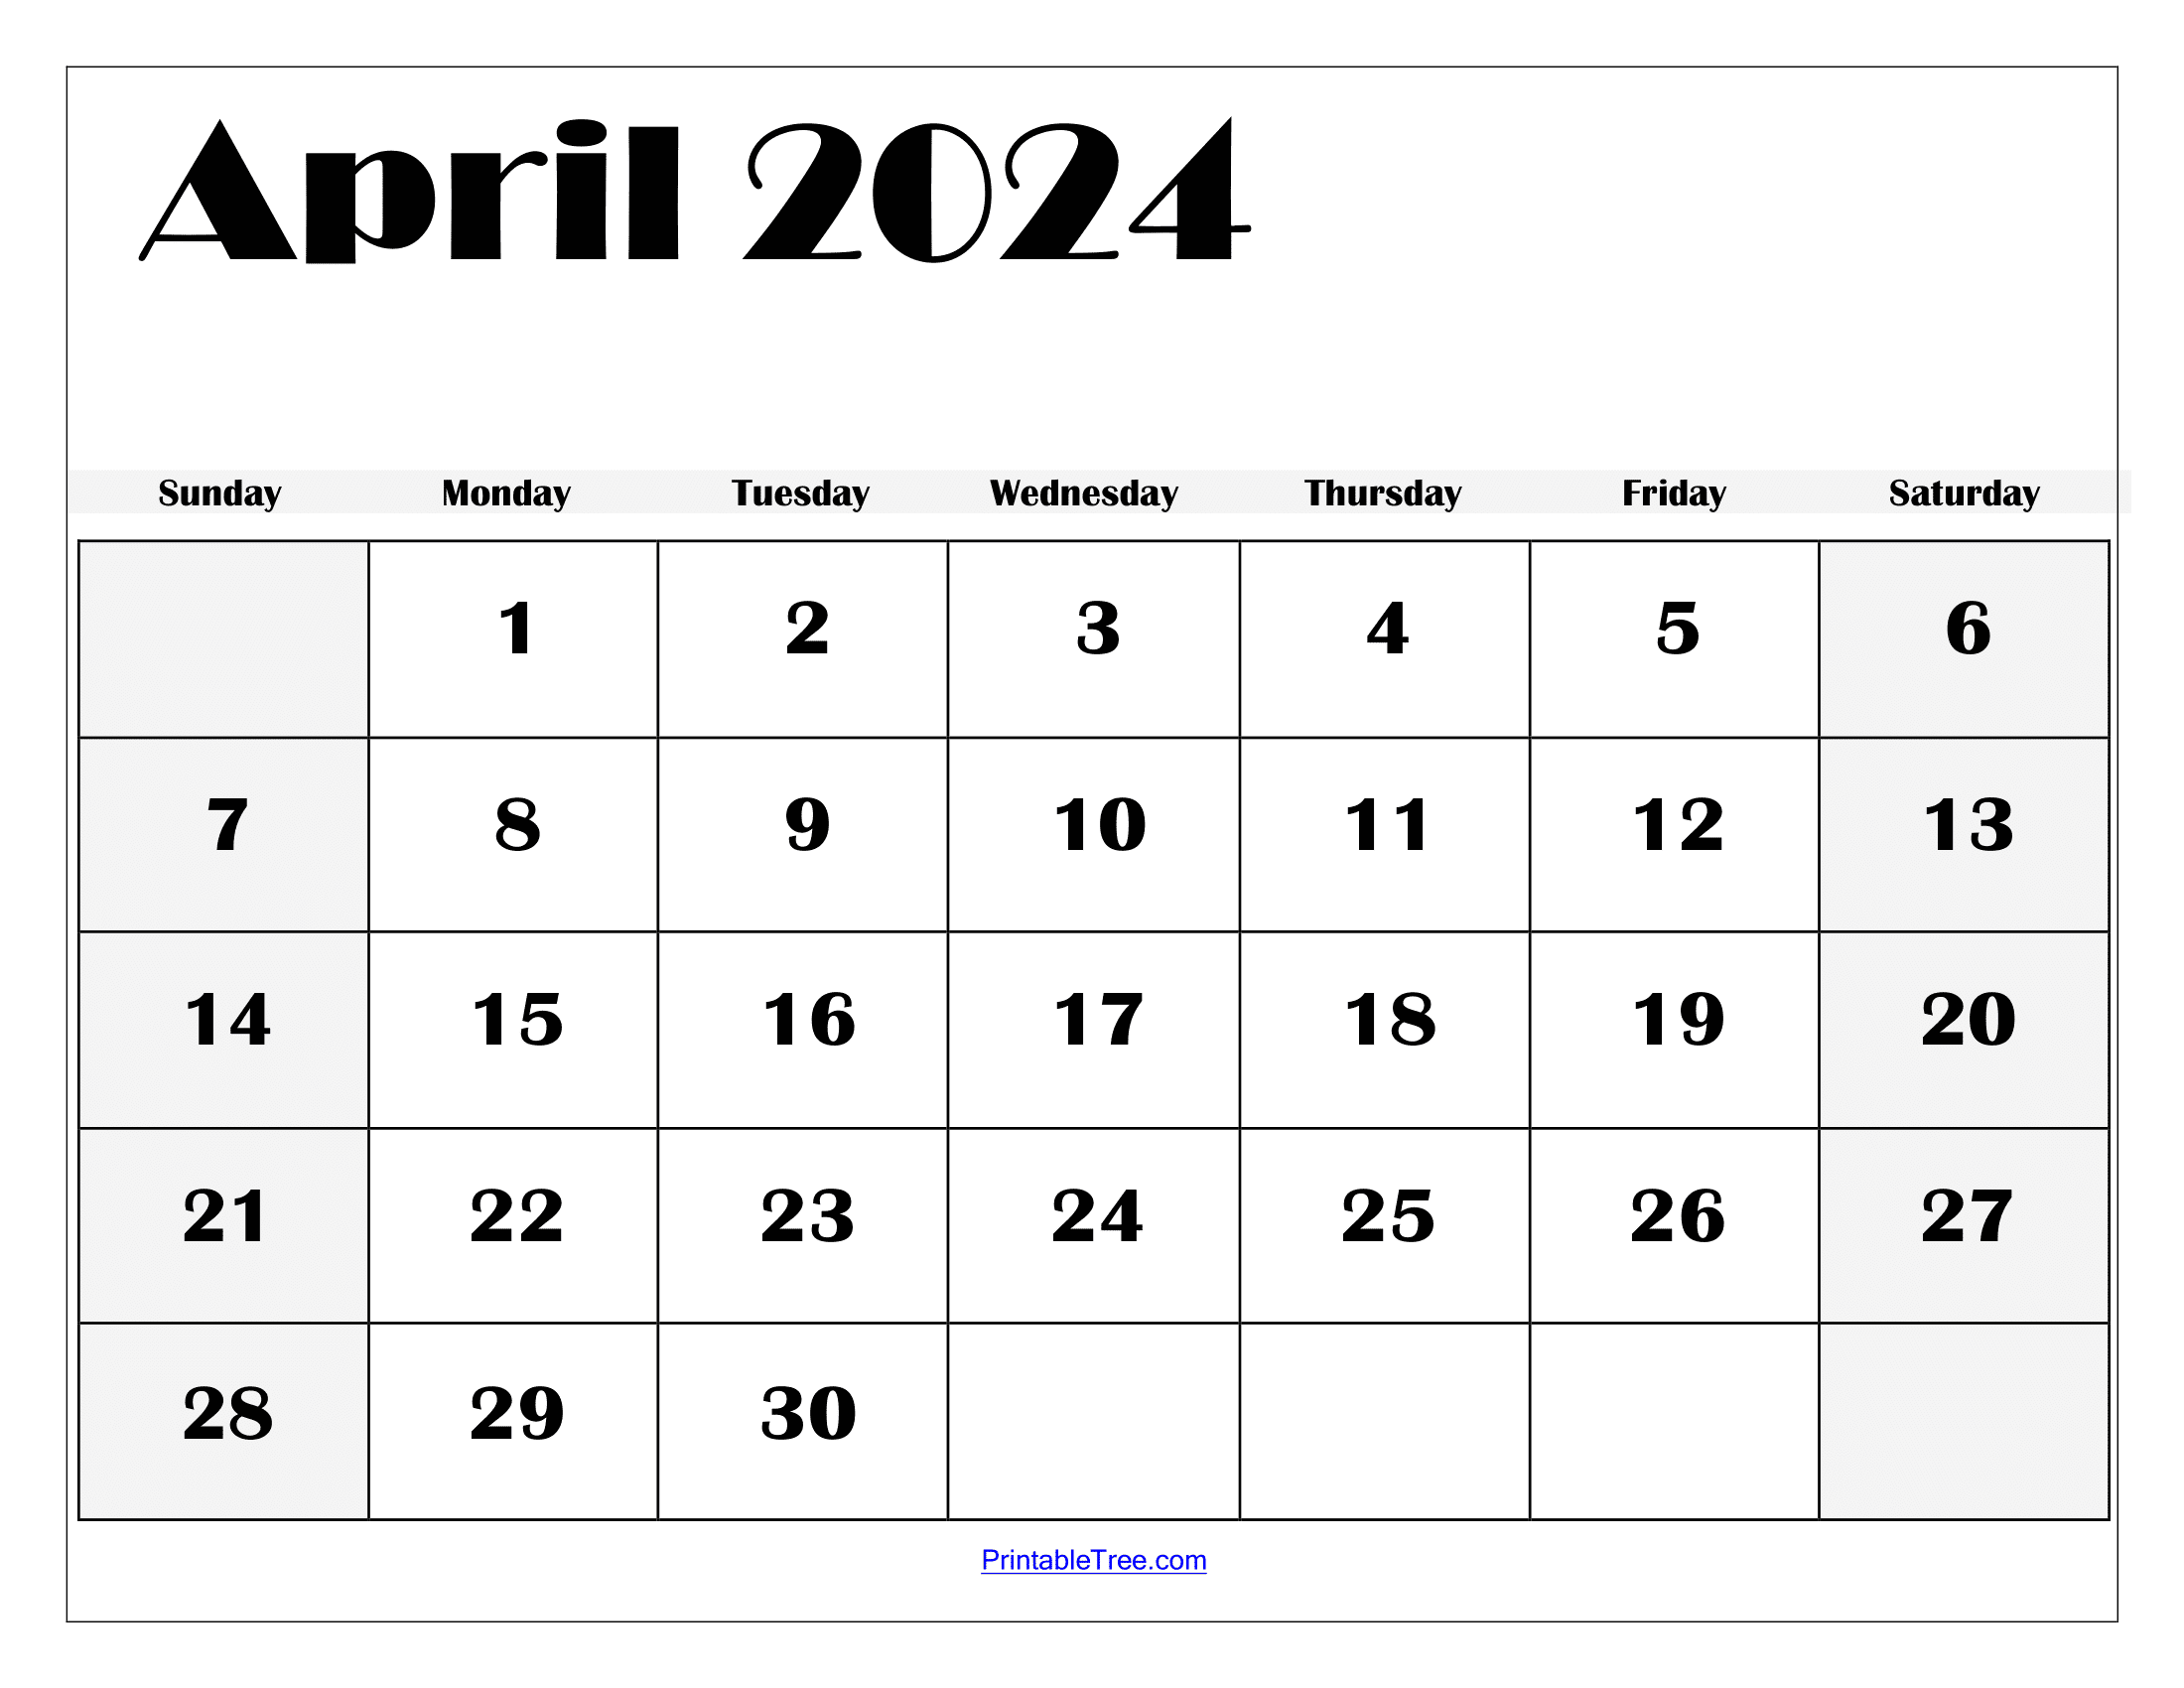 Blank April 2024 Calendar Printable Pdf Template With Holidays for April 2024 Blank Calendar Printable